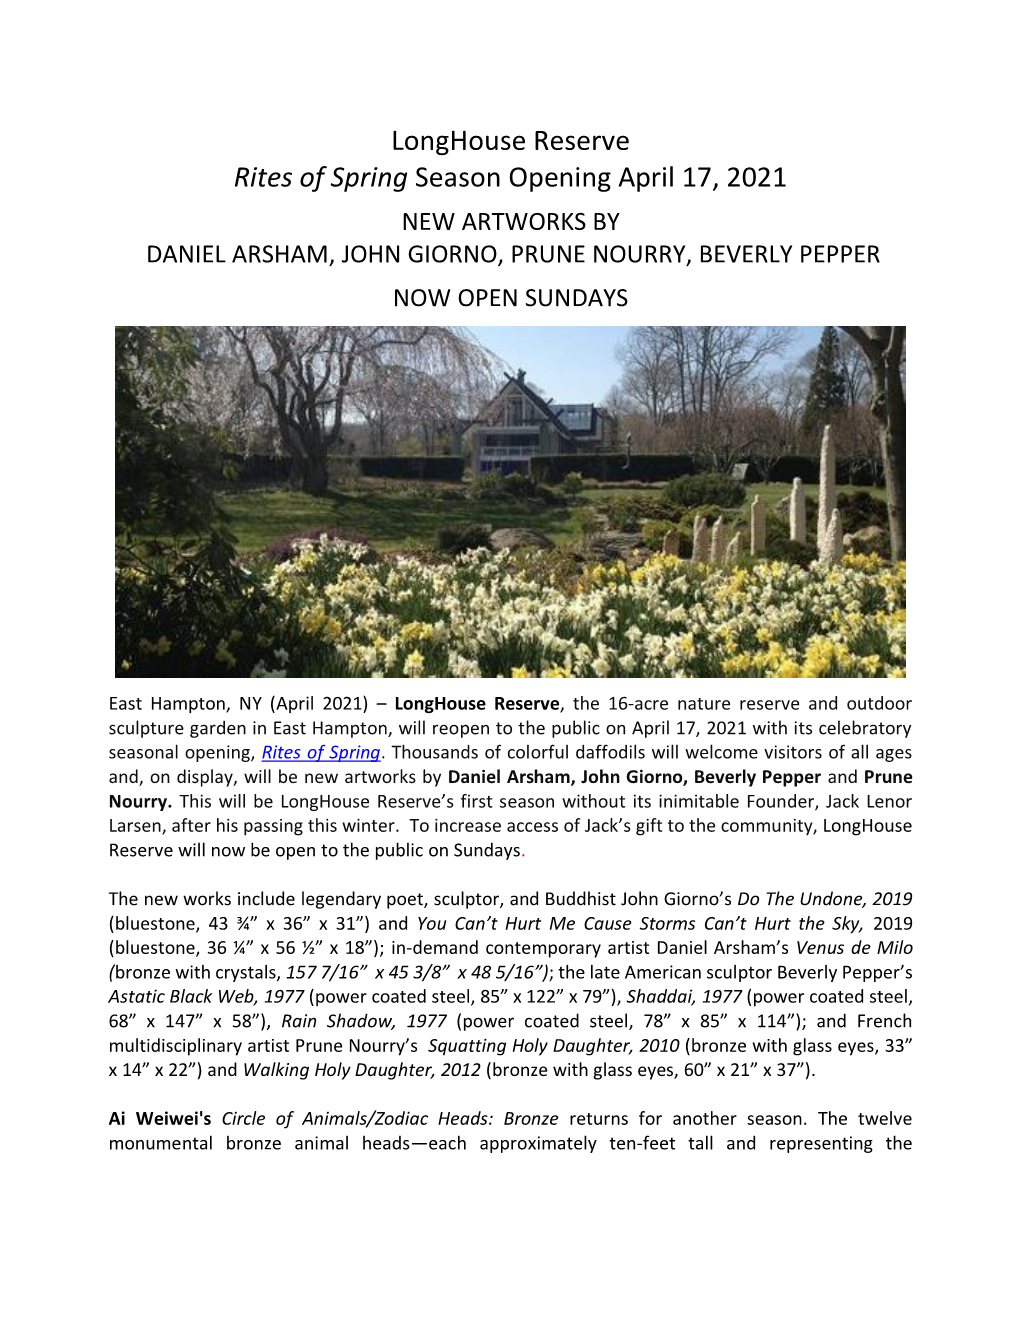 Longhouse Reserve Rites of Spring Season Opening April 17, 2021